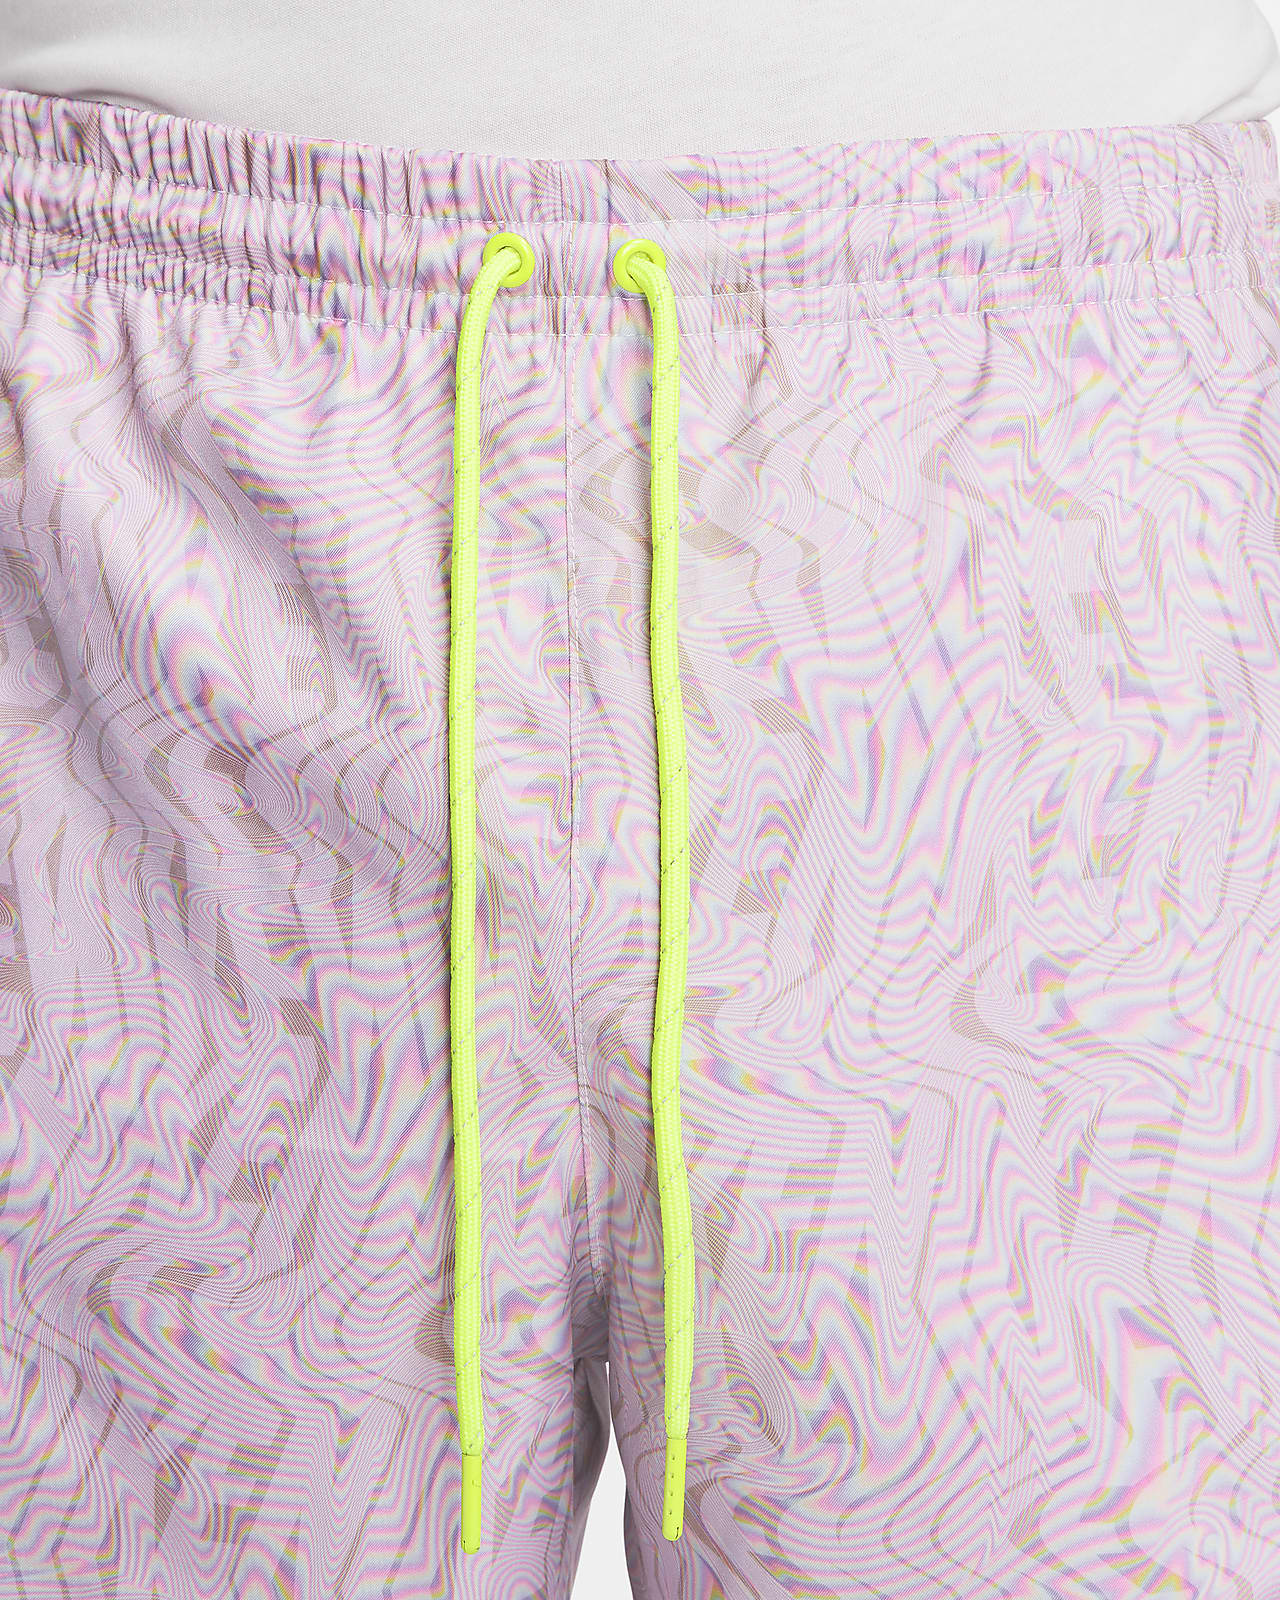 nike woven mirror logo shorts